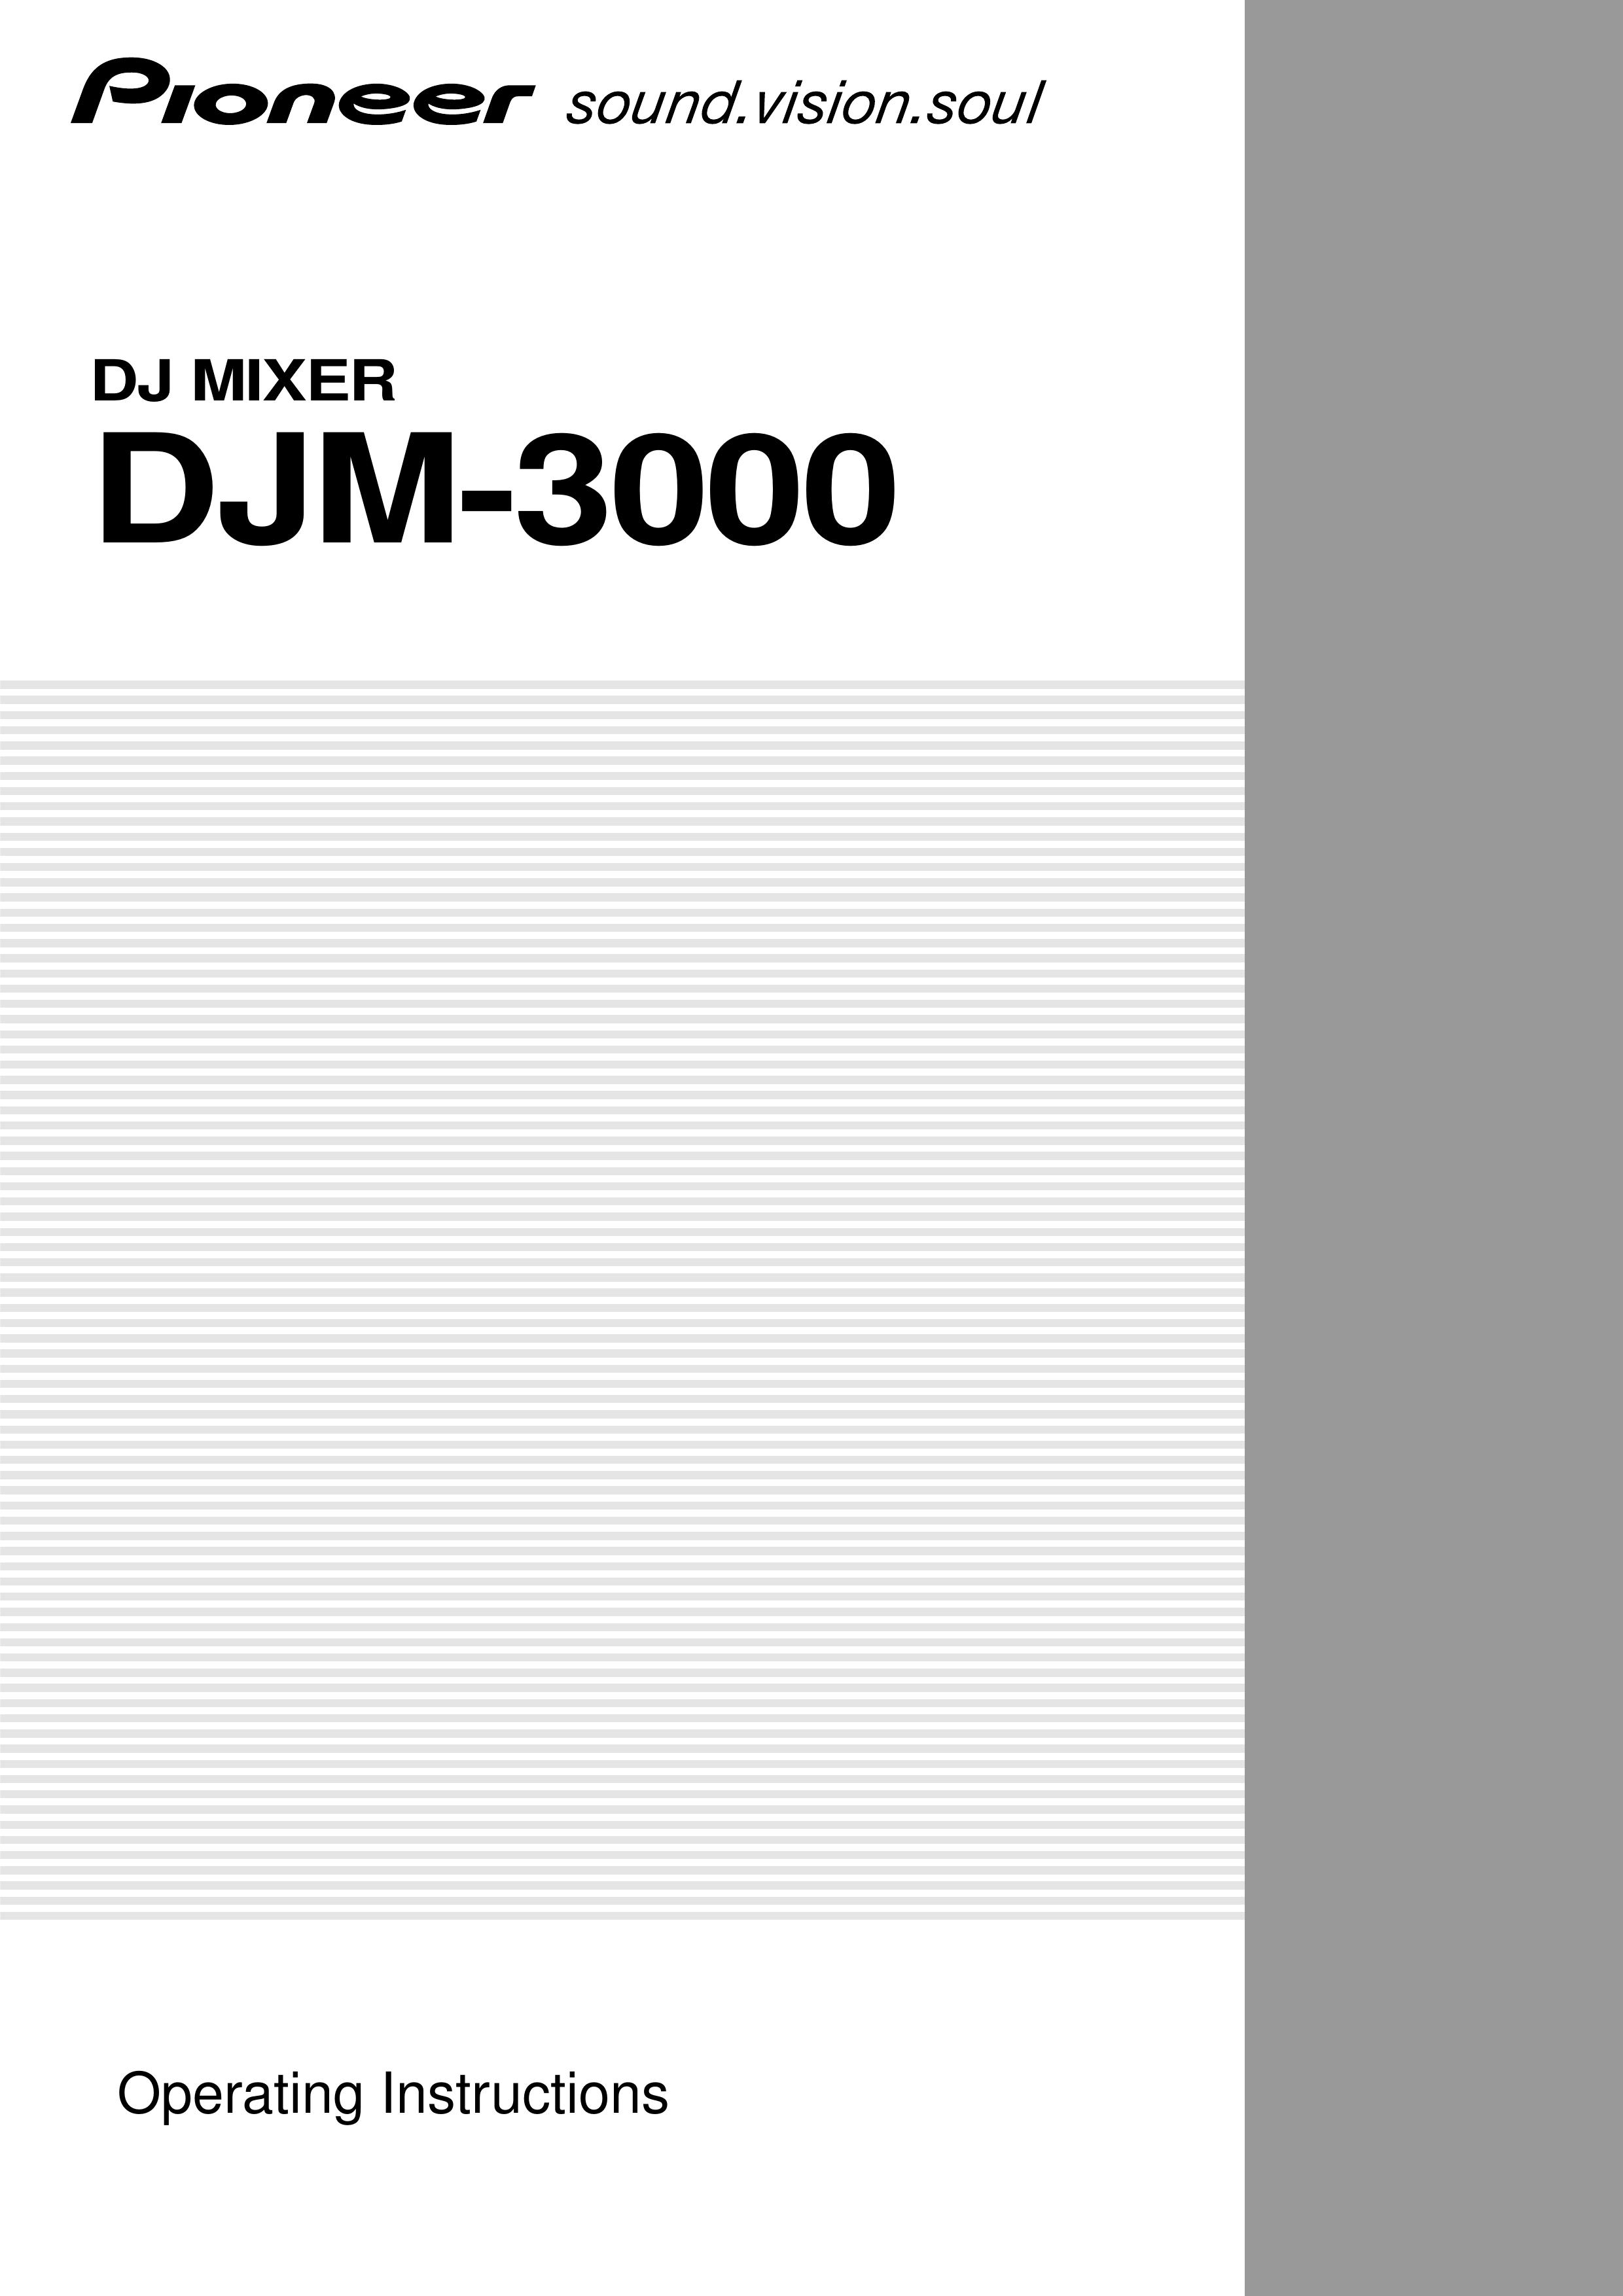 Plantronics DJM-3000 DJ Equipment User Manual